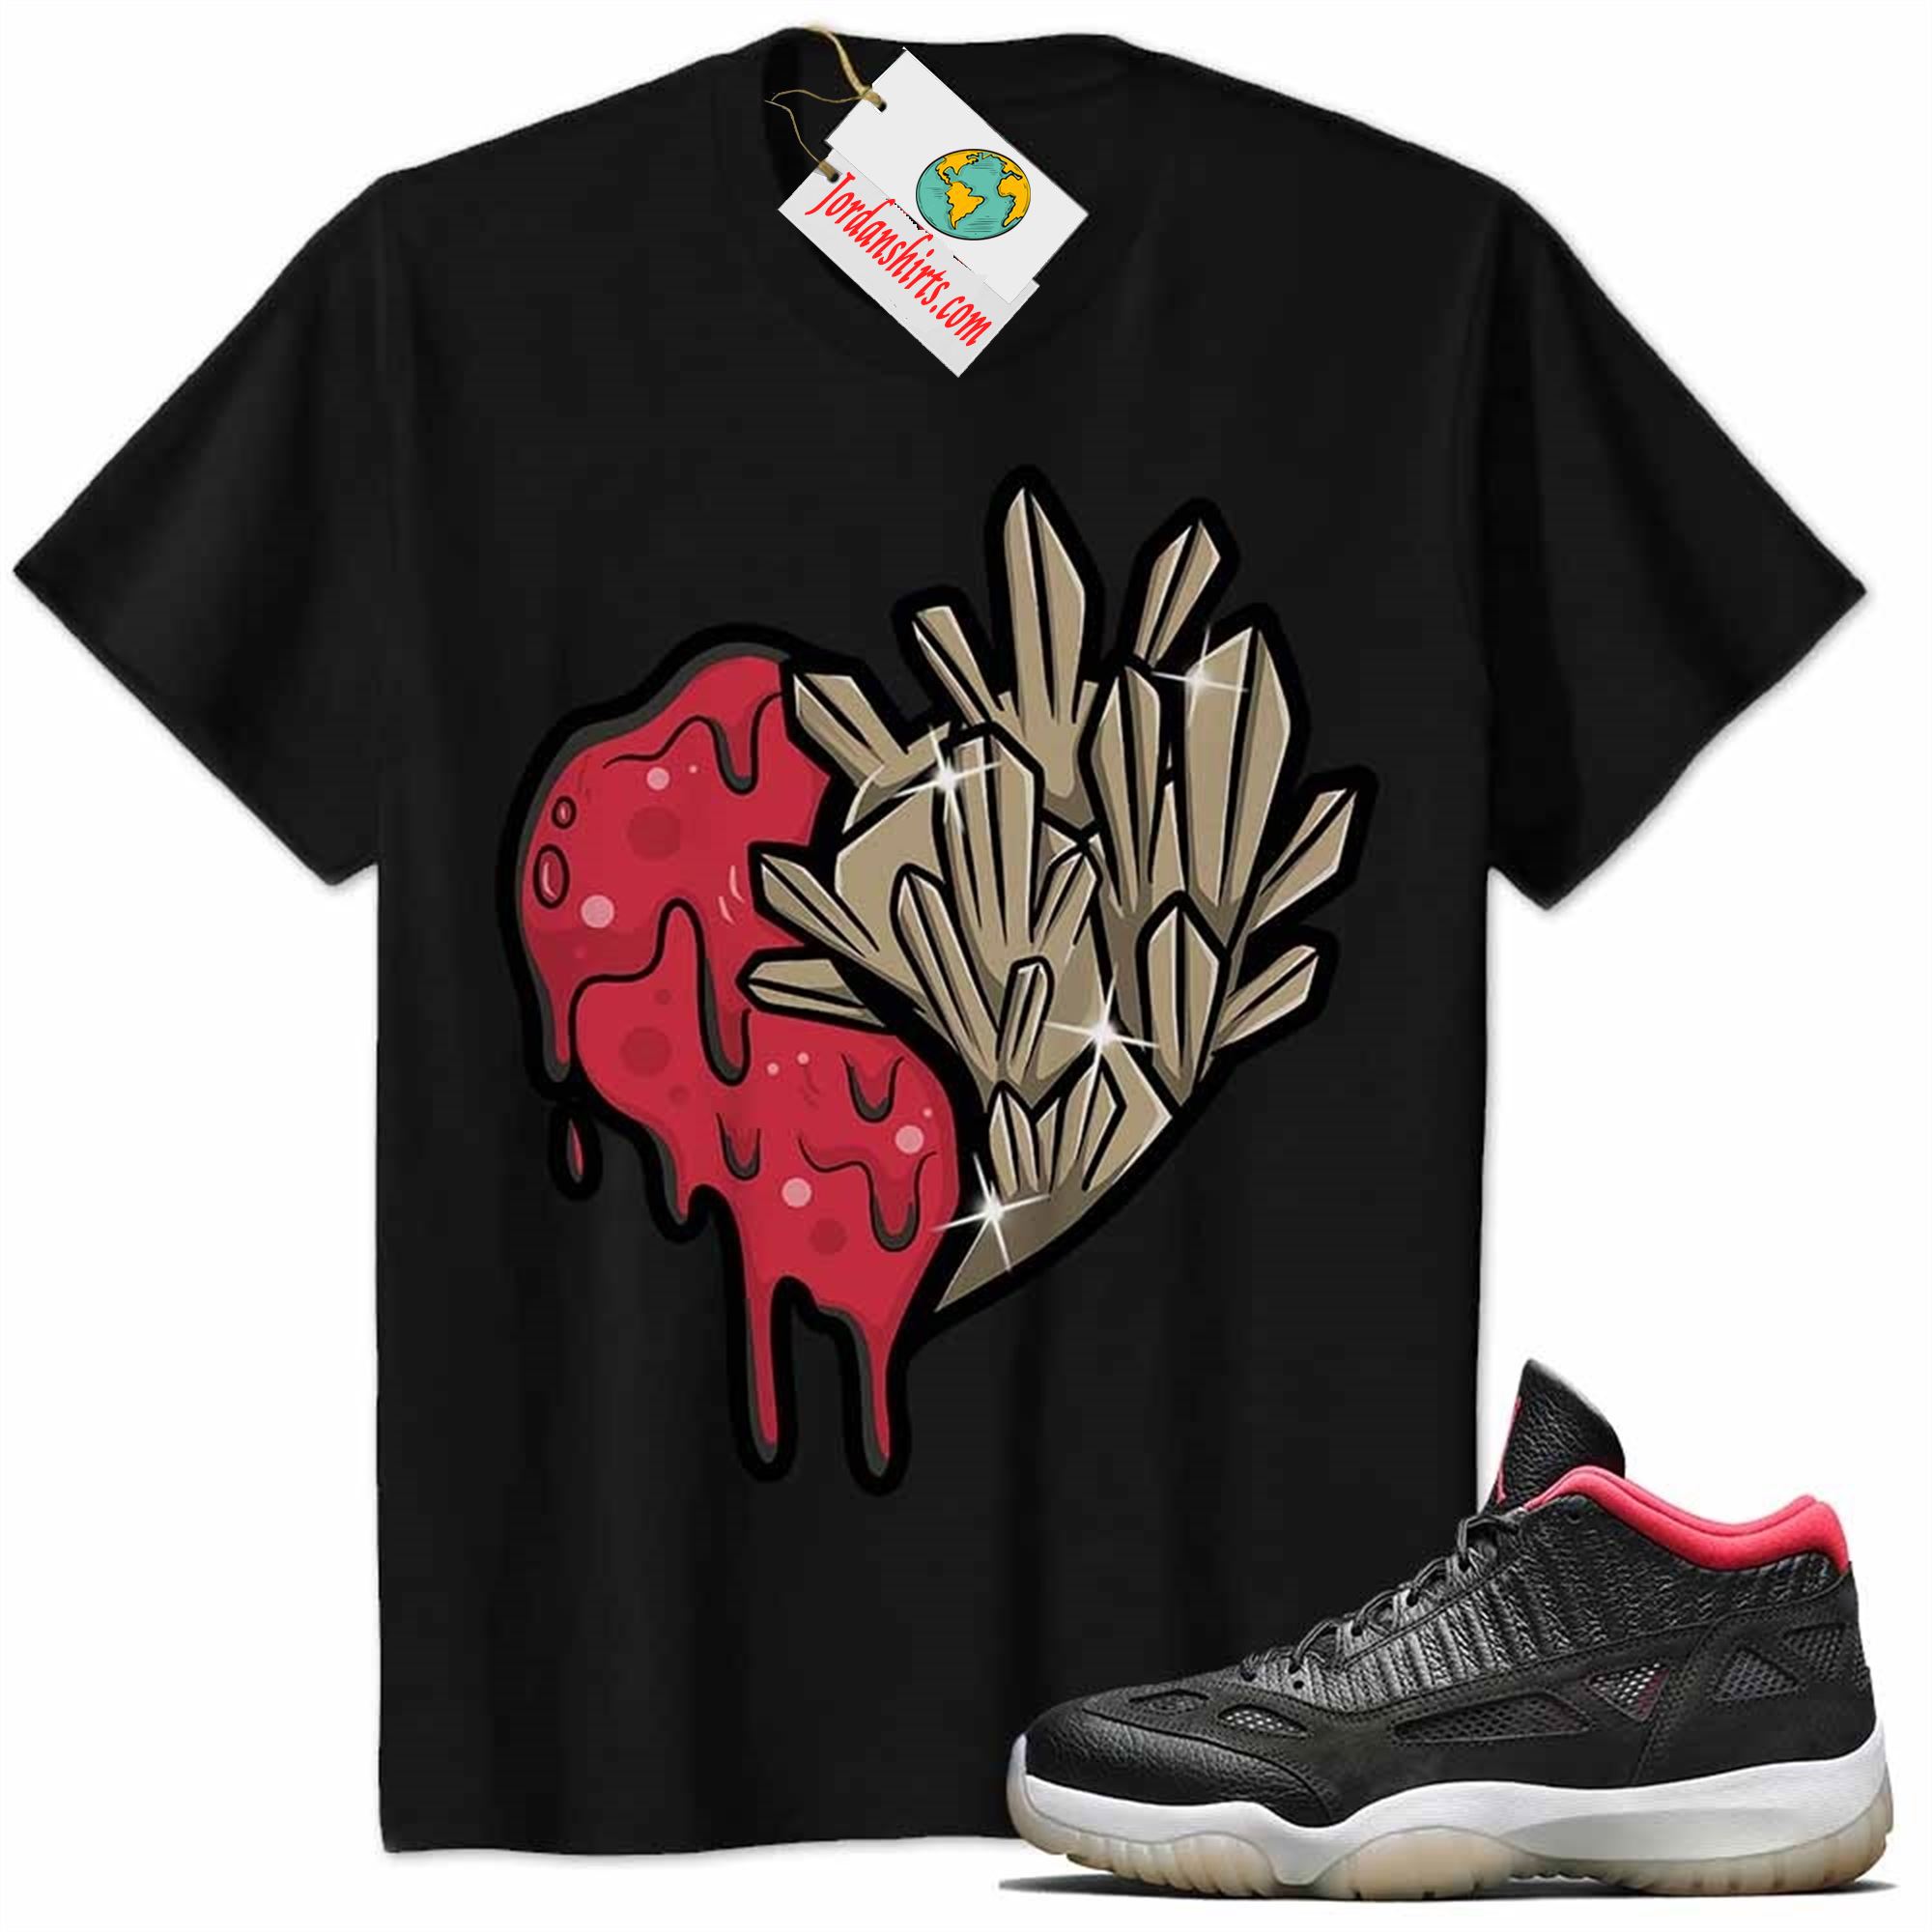 Jordan 11 Shirt, Crystal And Melt Heart Black Air Jordan 11 Bred 11s Plus Size Up To 5xl